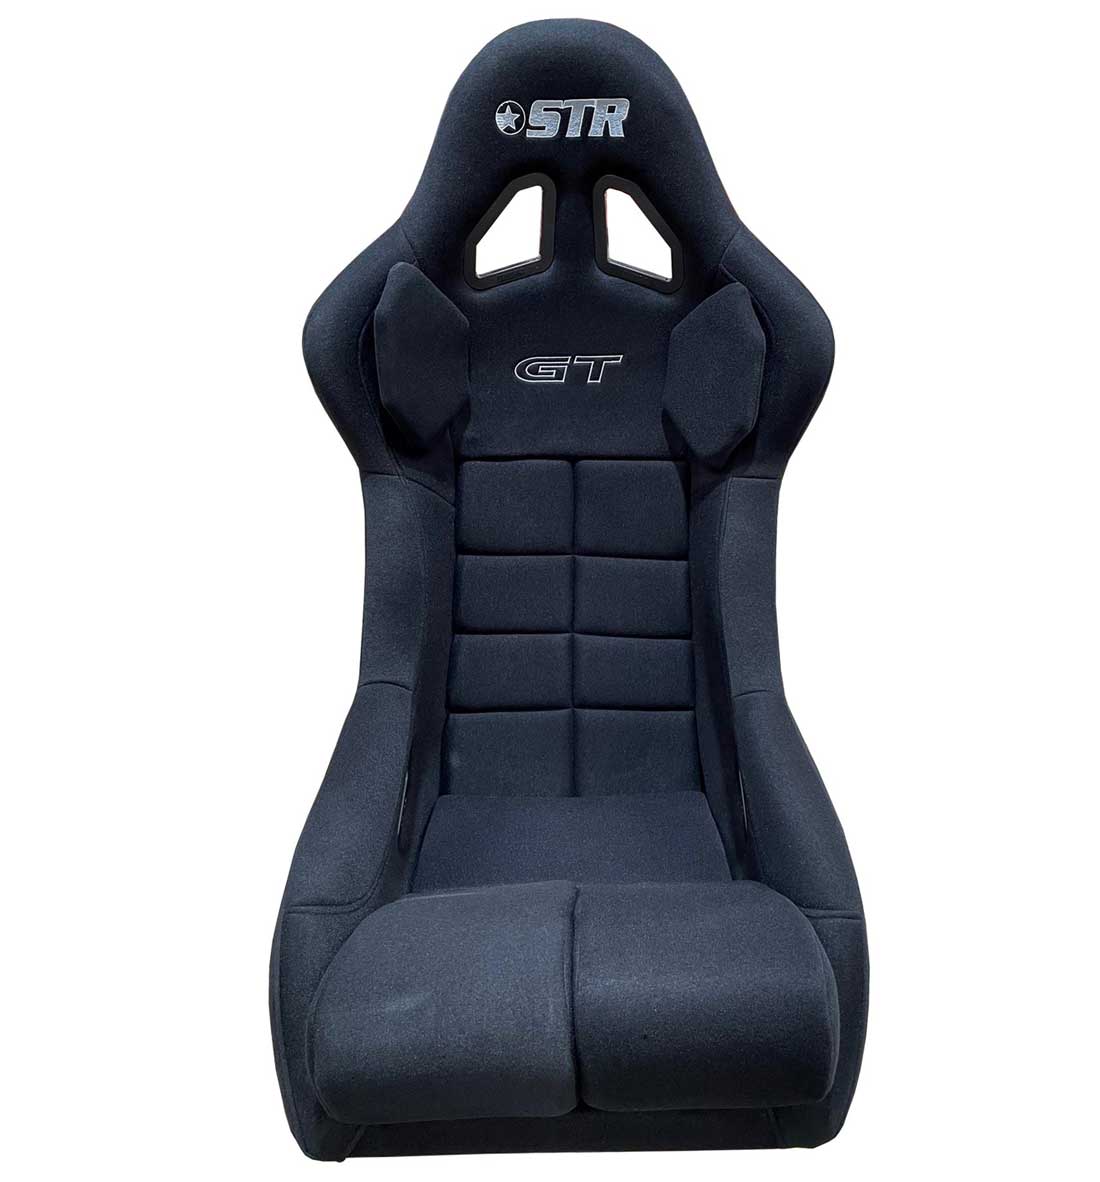 STR 'GT' FIA Approved Race Seat - 2026